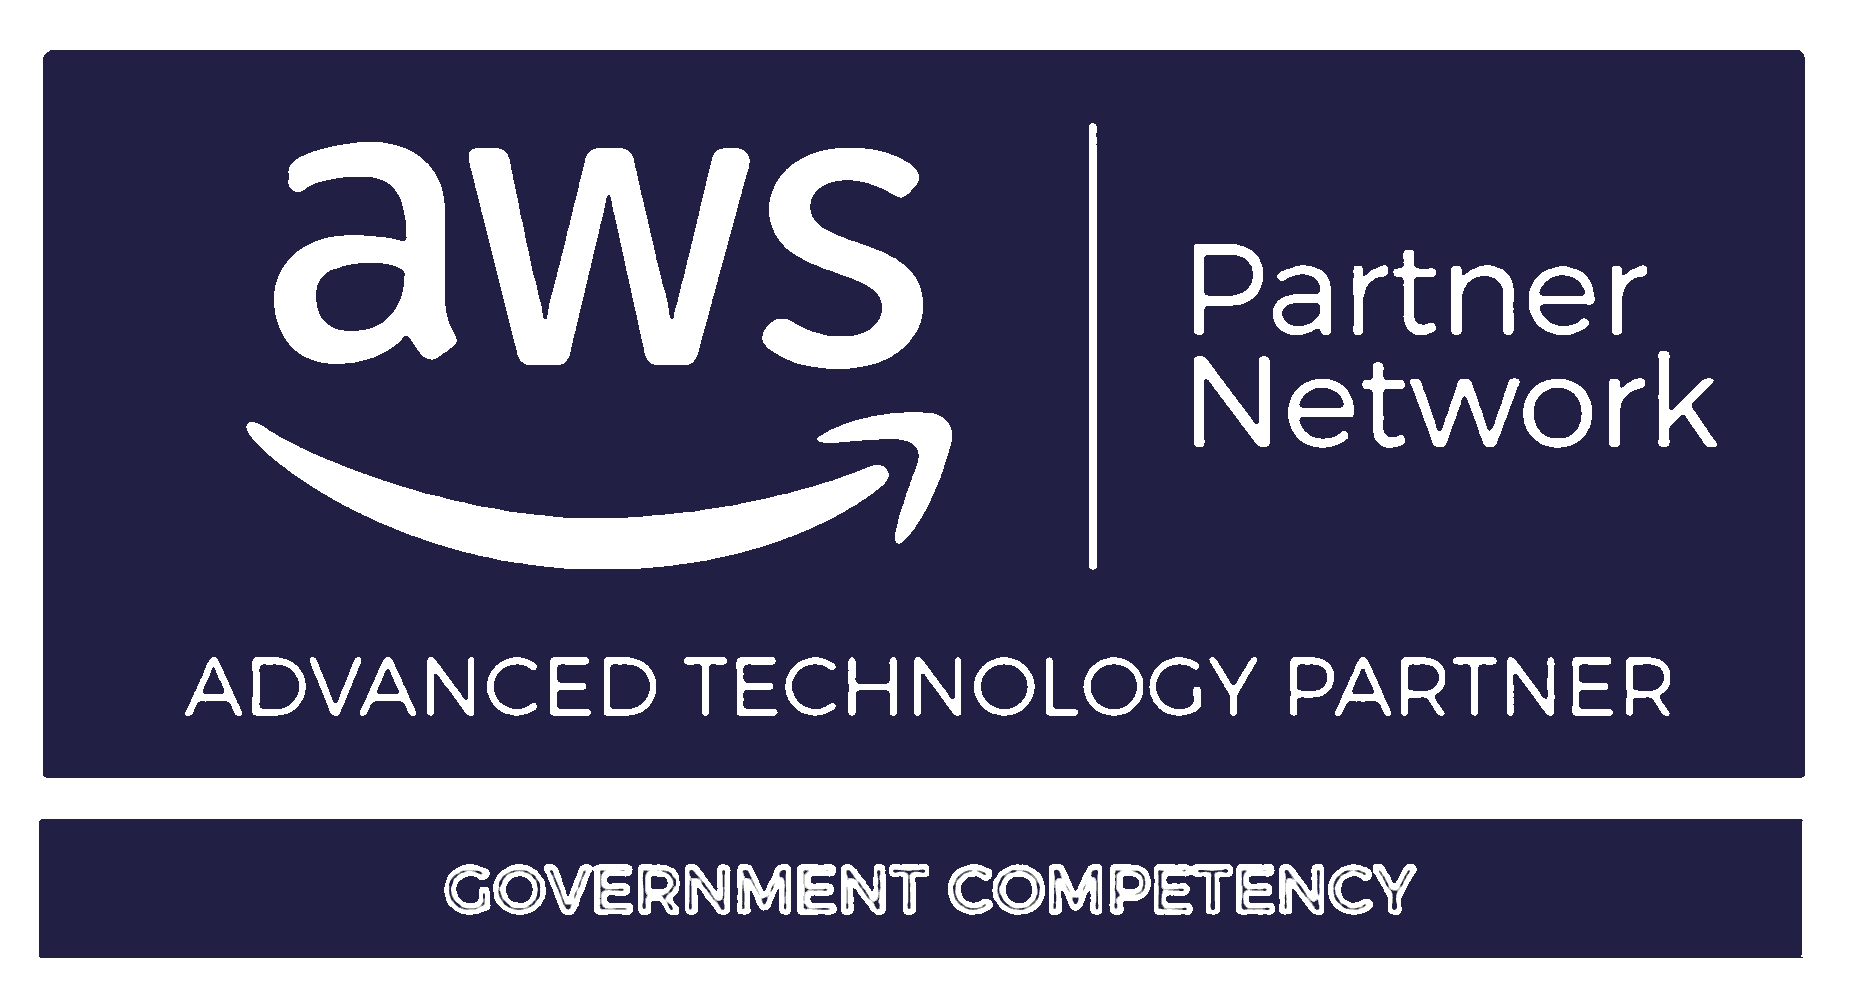 Aws gov competency logo dark blue edit